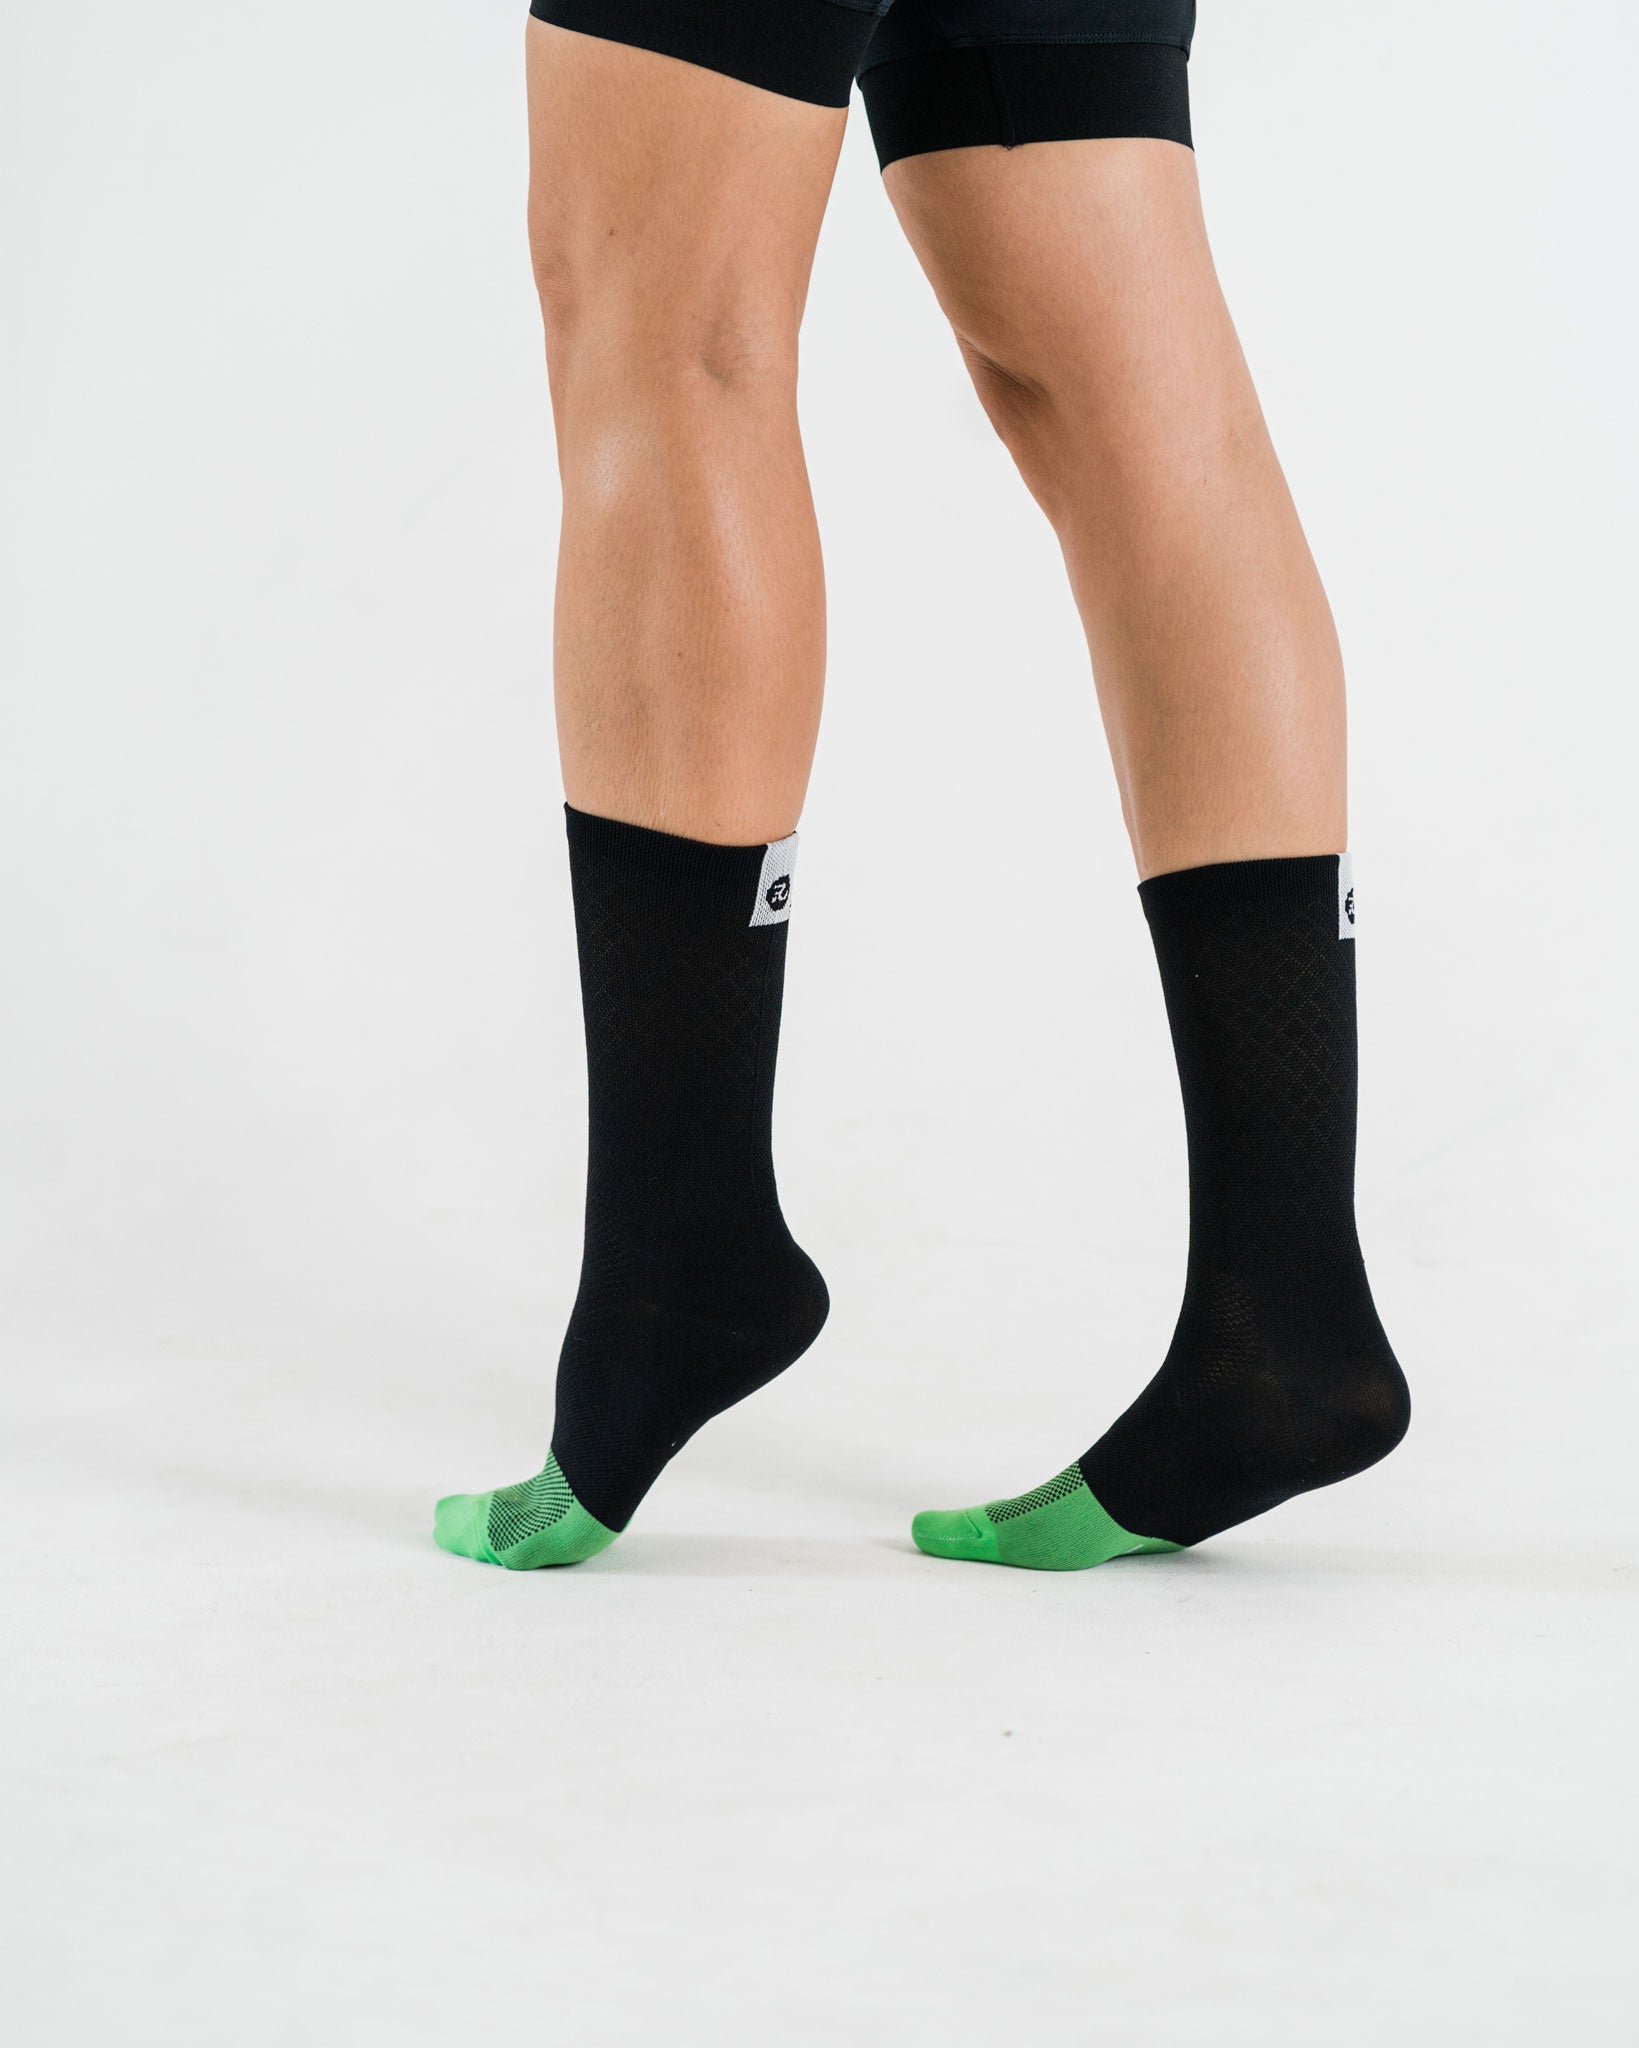 woman wearing black cycling socks